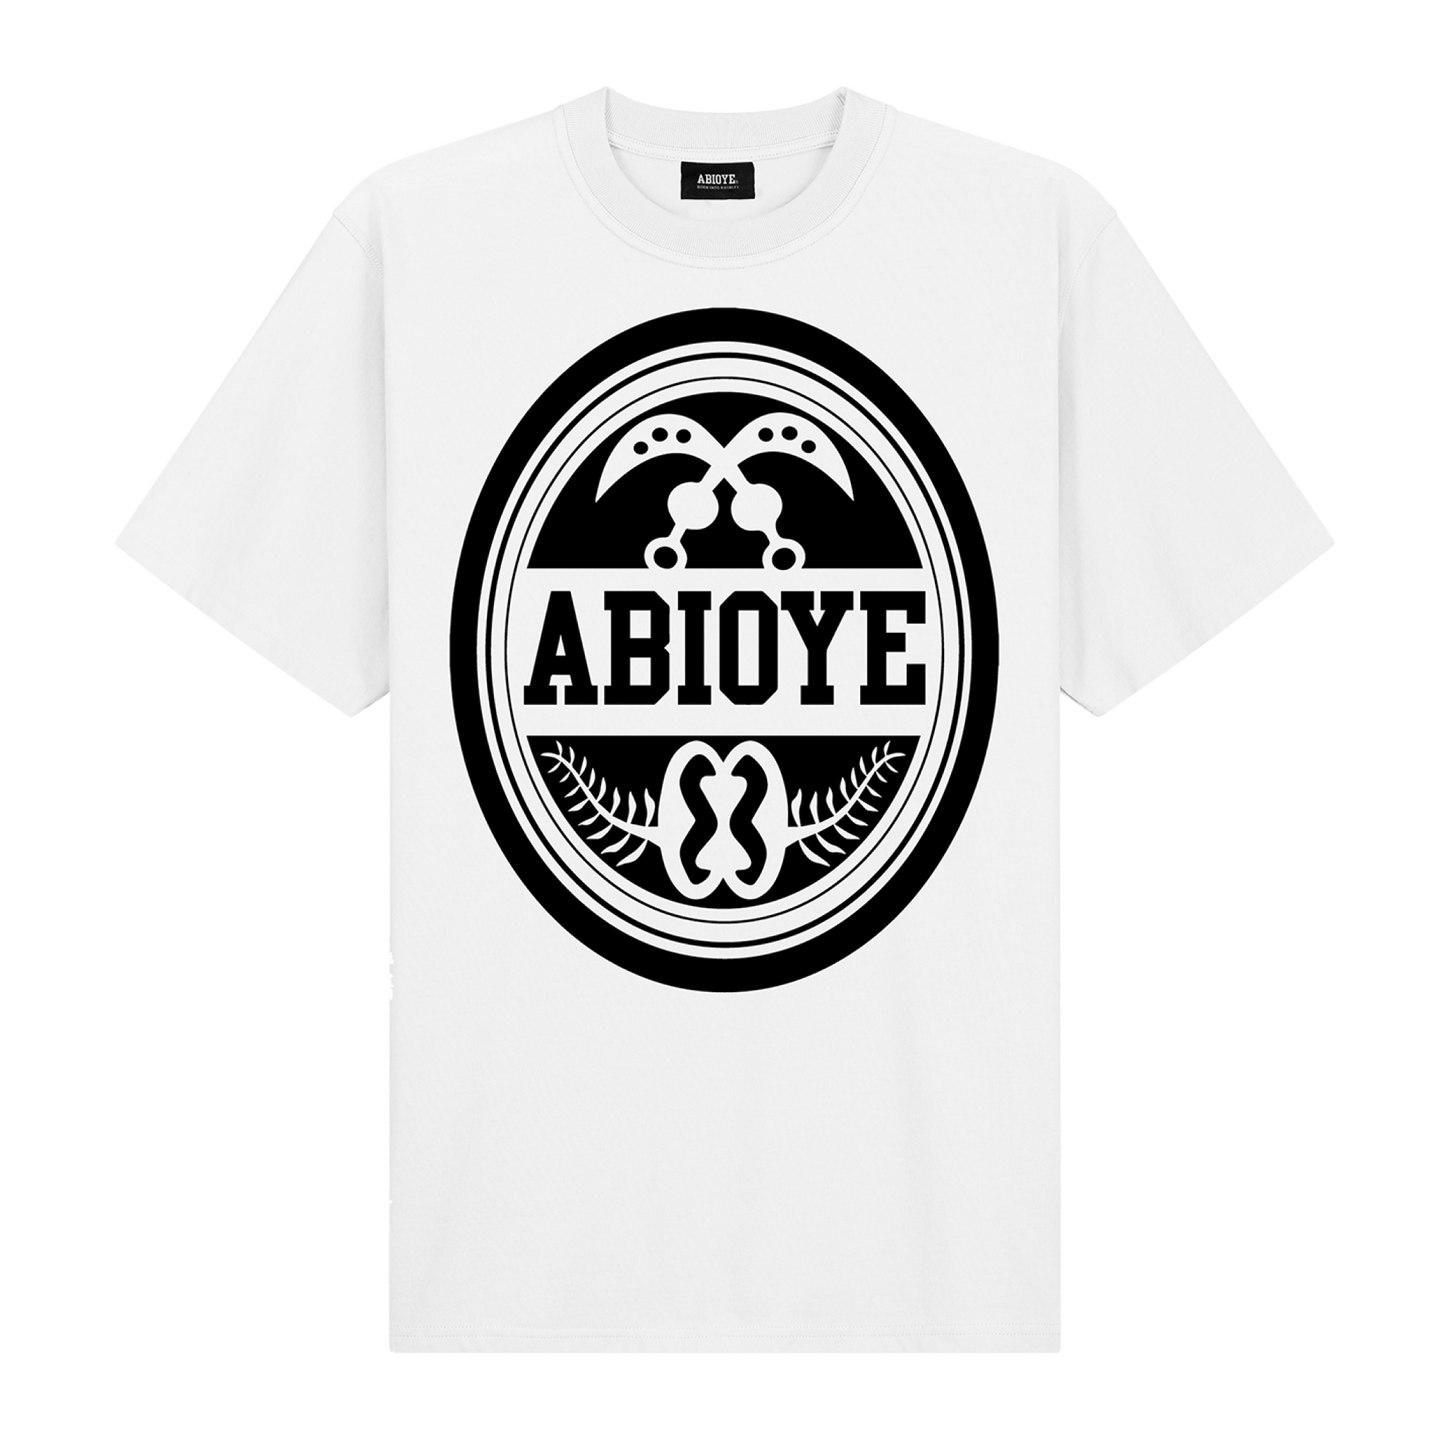 SS14 Abioye Original t-shirt